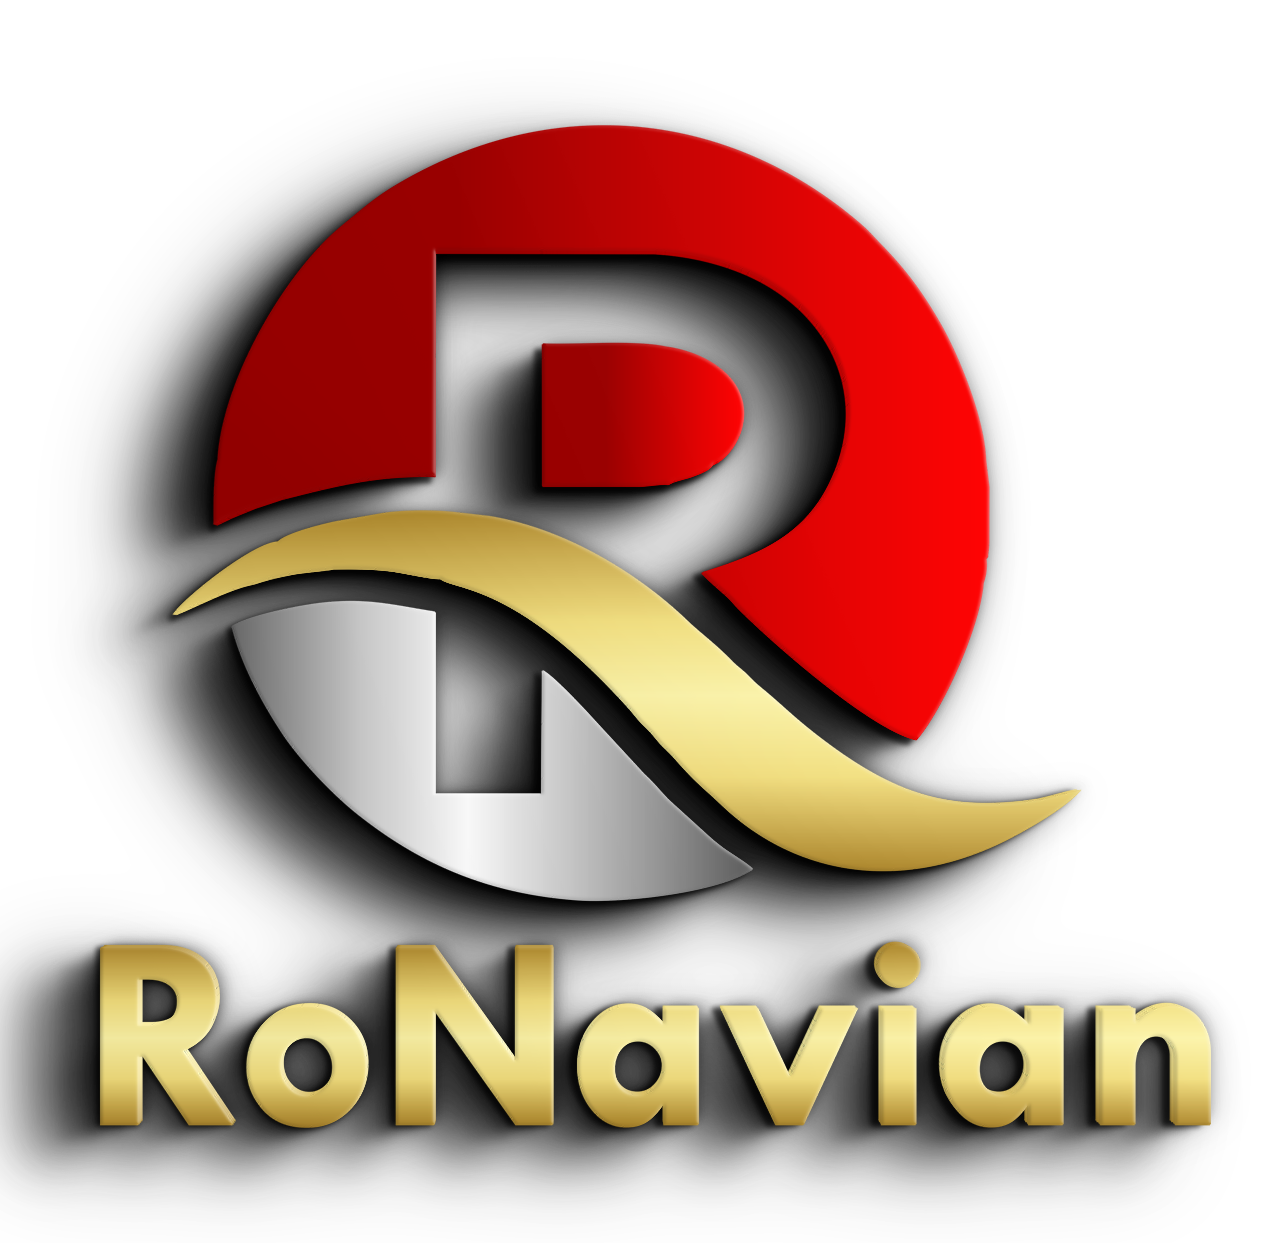 RoNavian